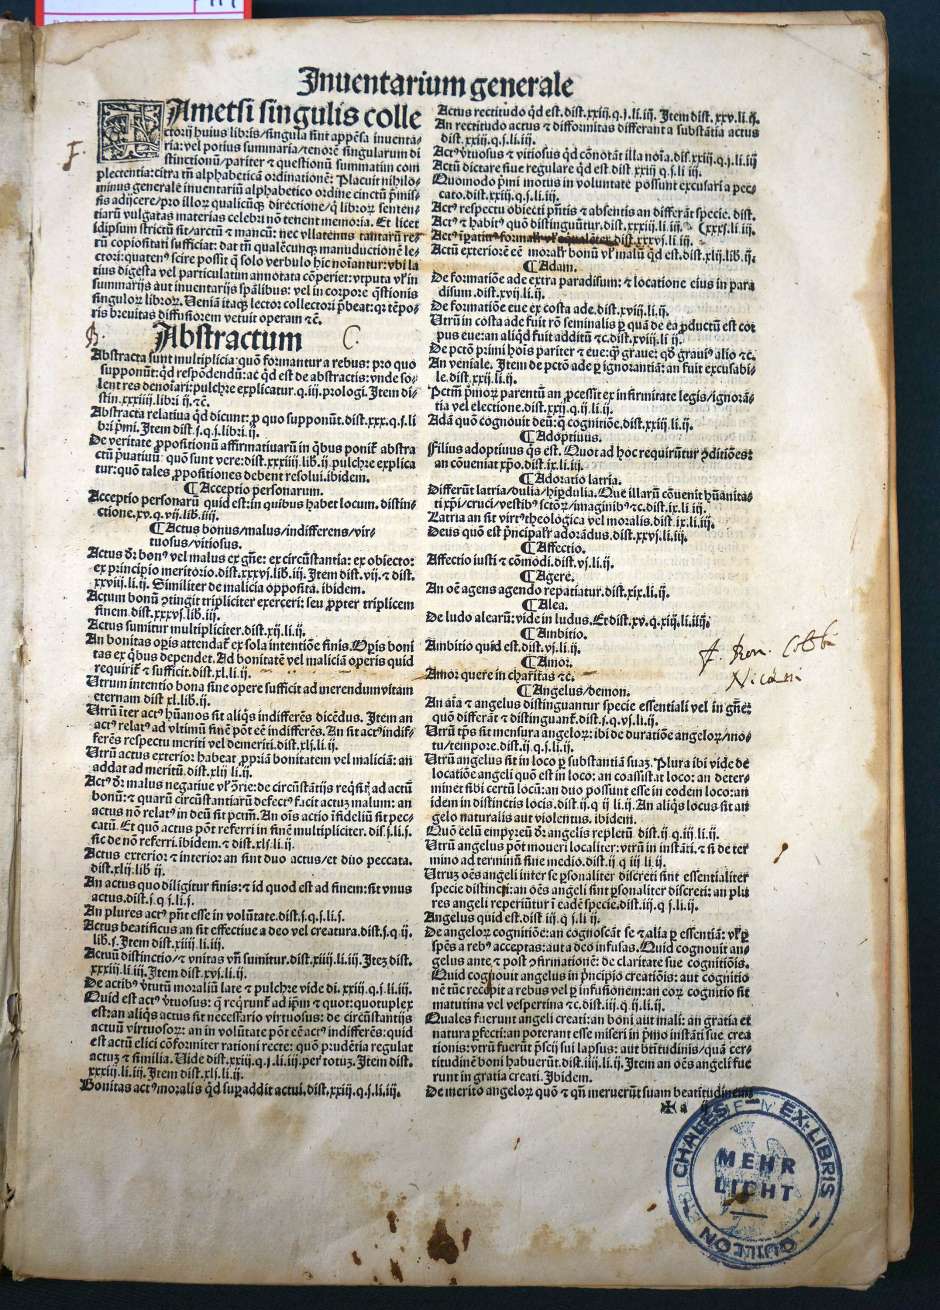 Lot 1075, Auction  115, Biel, Gabriel, Inventarium seu Repertorium generale